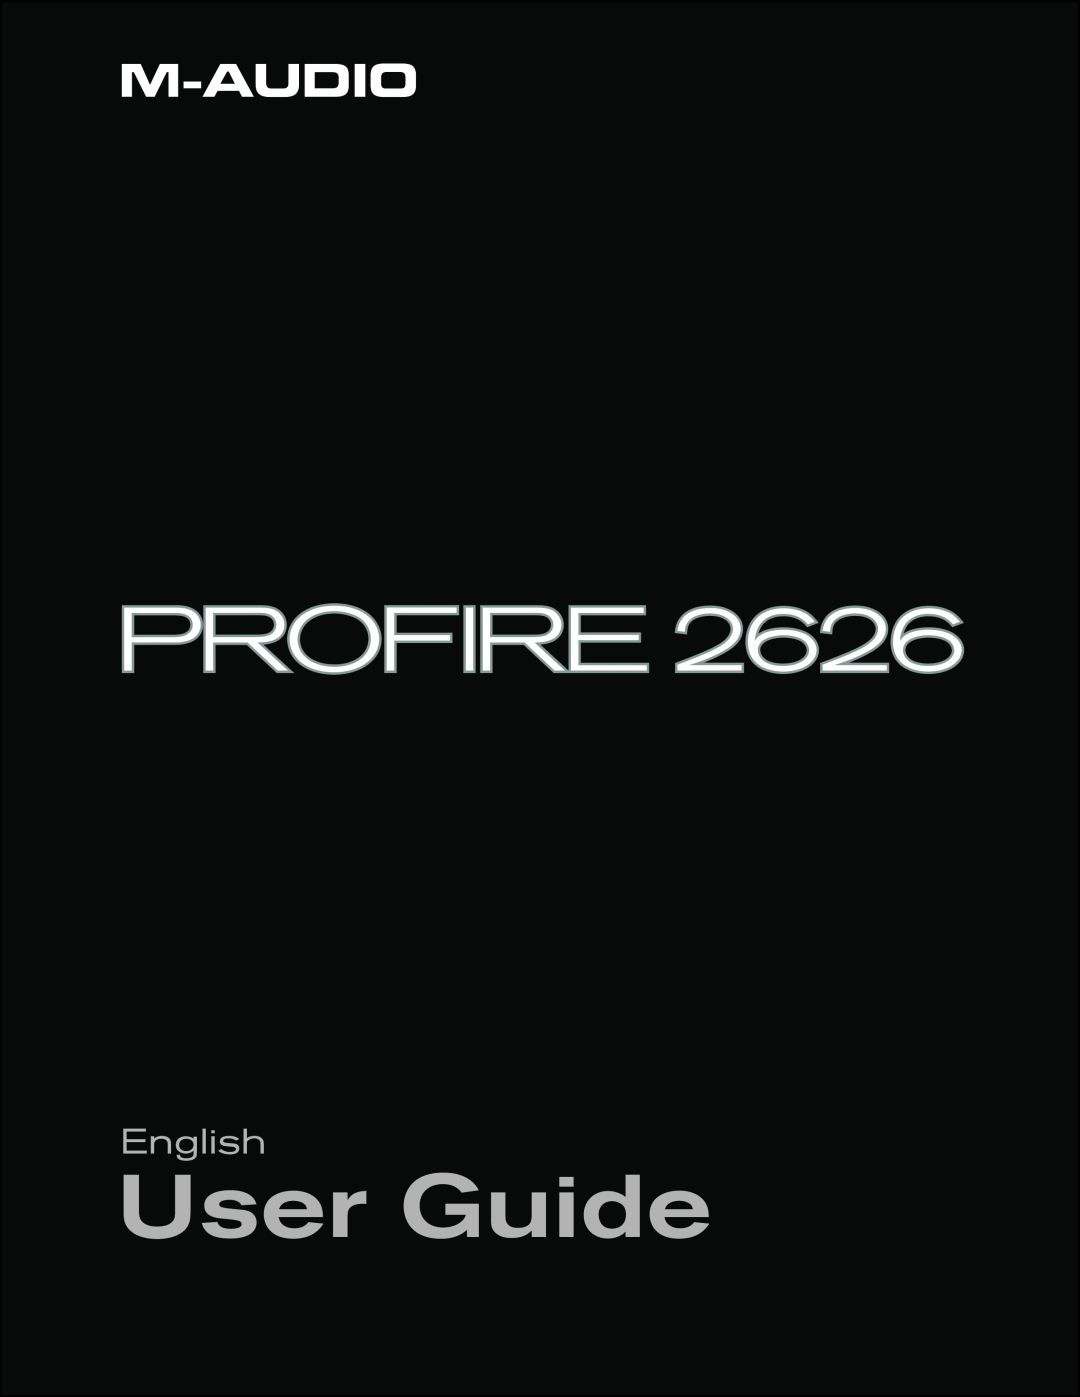 M-Audio 2626 manual User Guide, English 